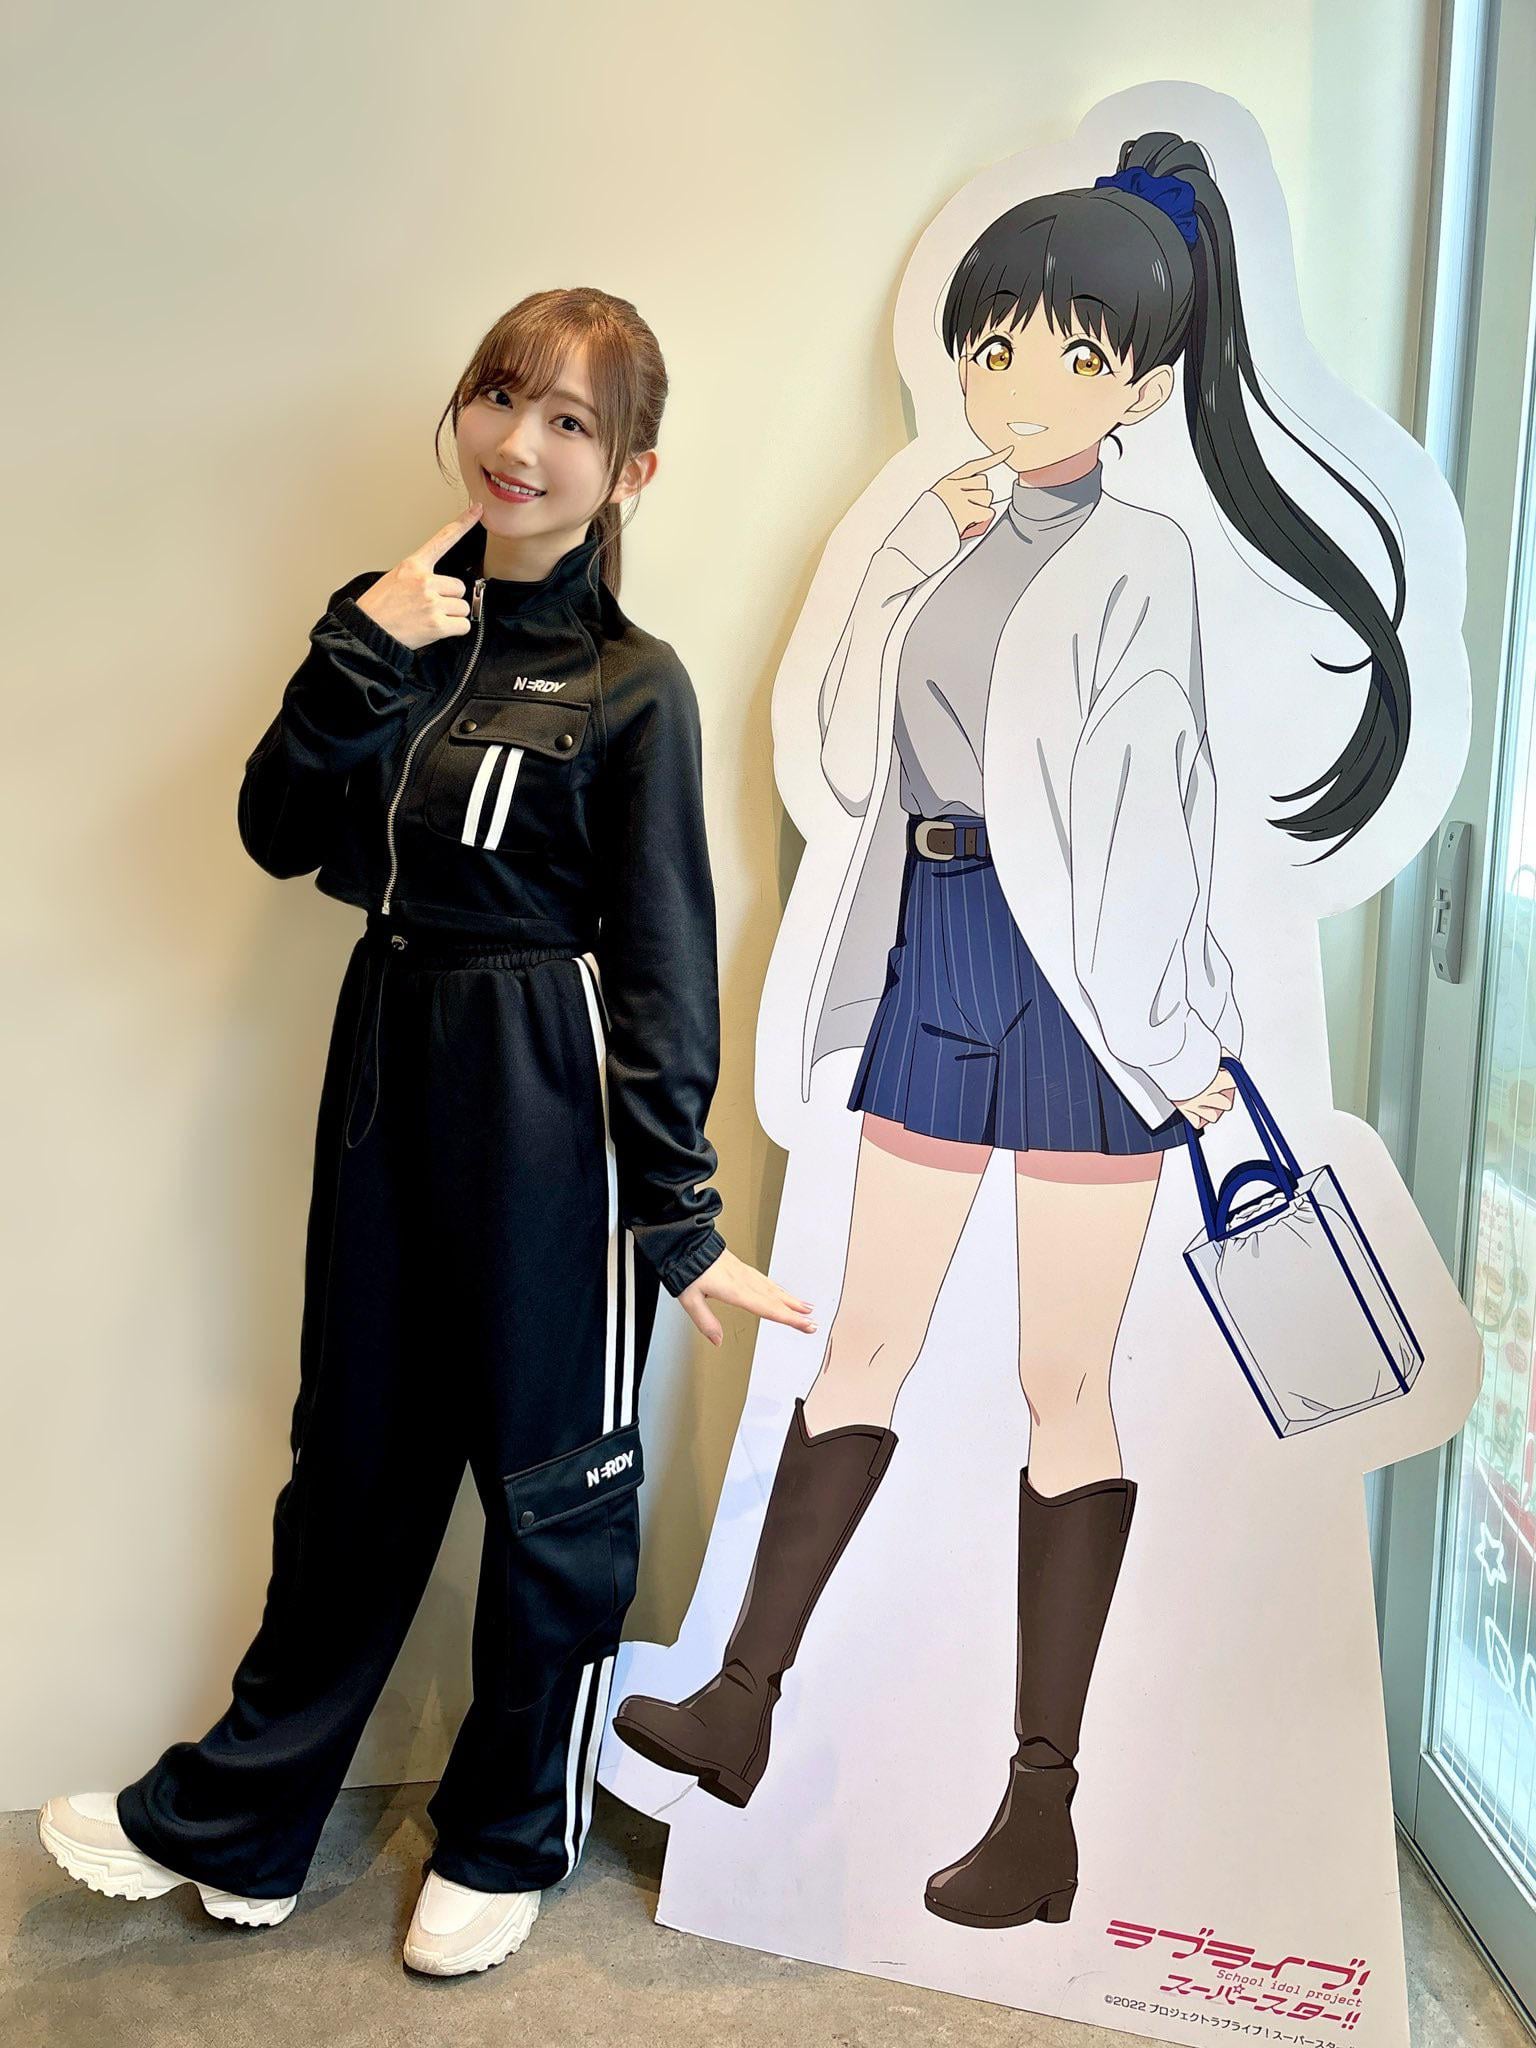 aoyama nagisa posing with ren hazuki